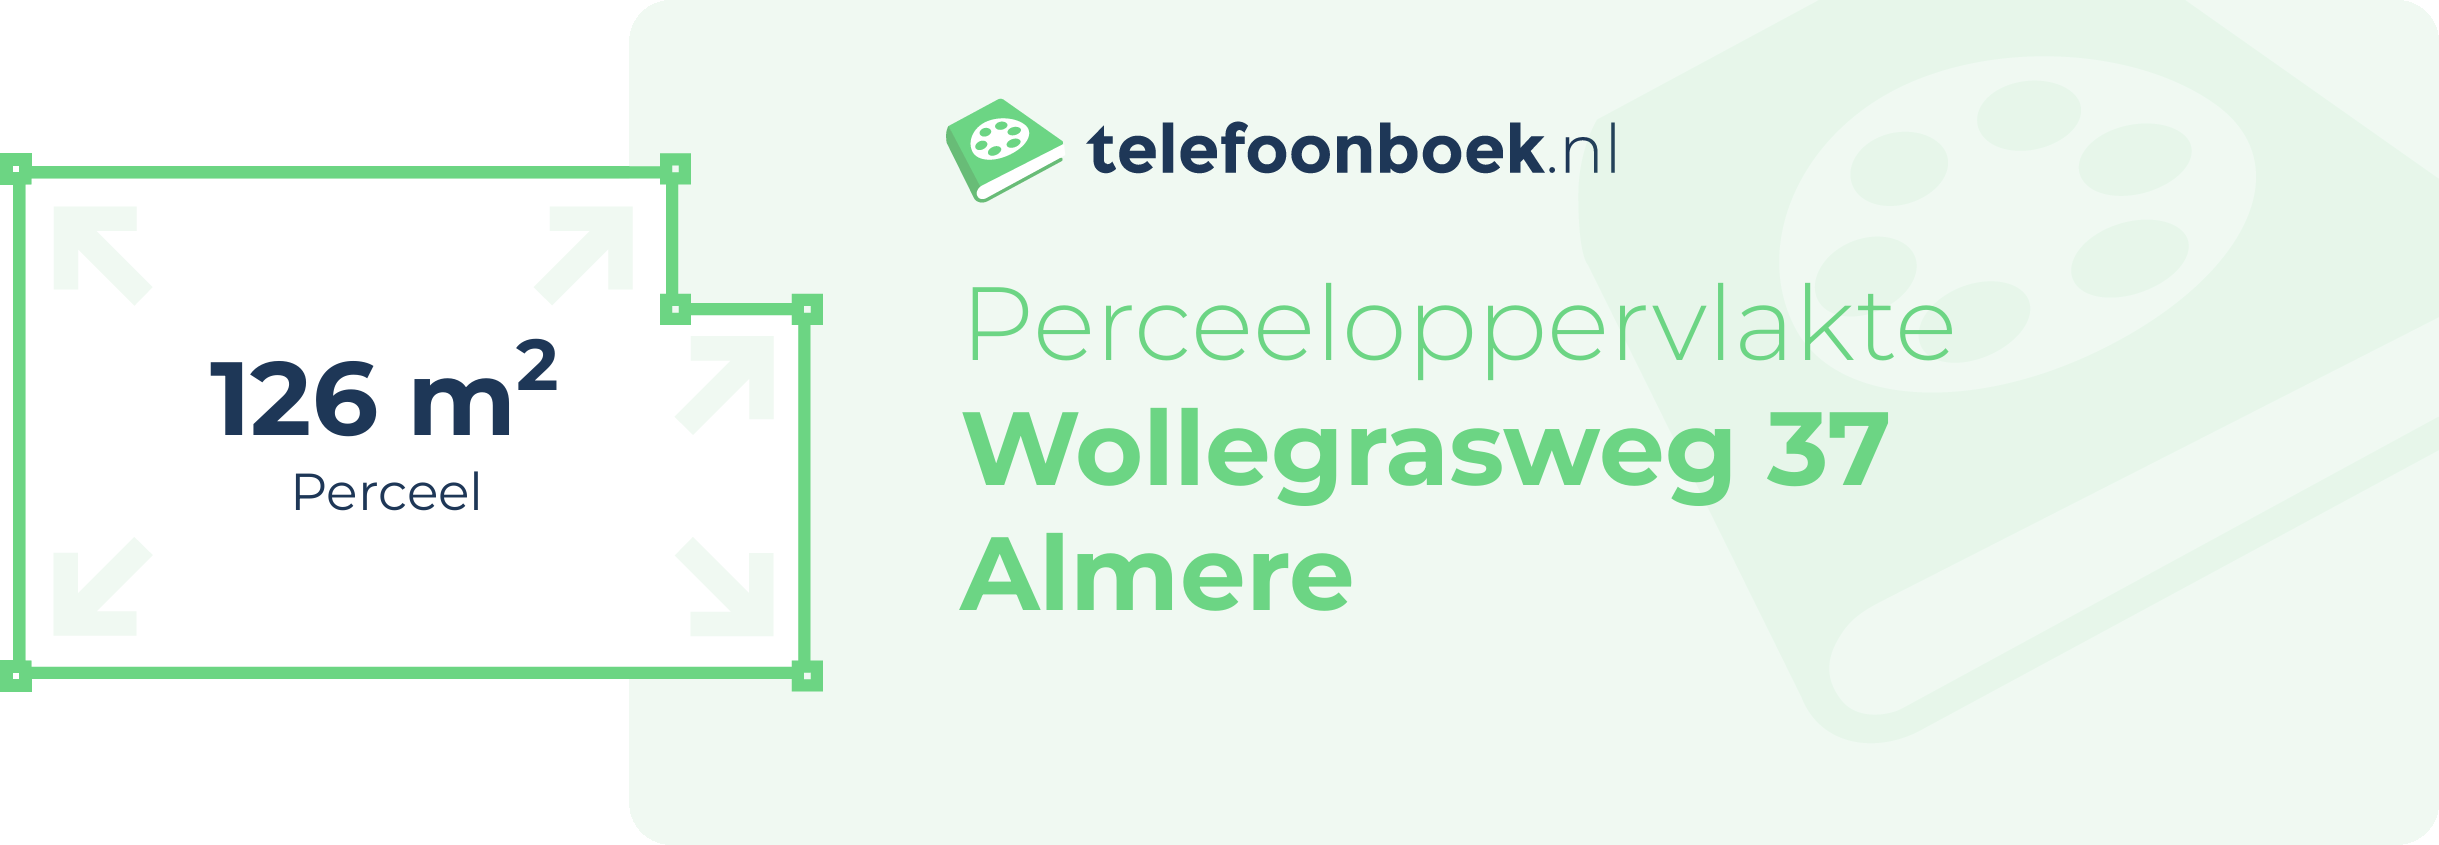 Perceeloppervlakte Wollegrasweg 37 Almere